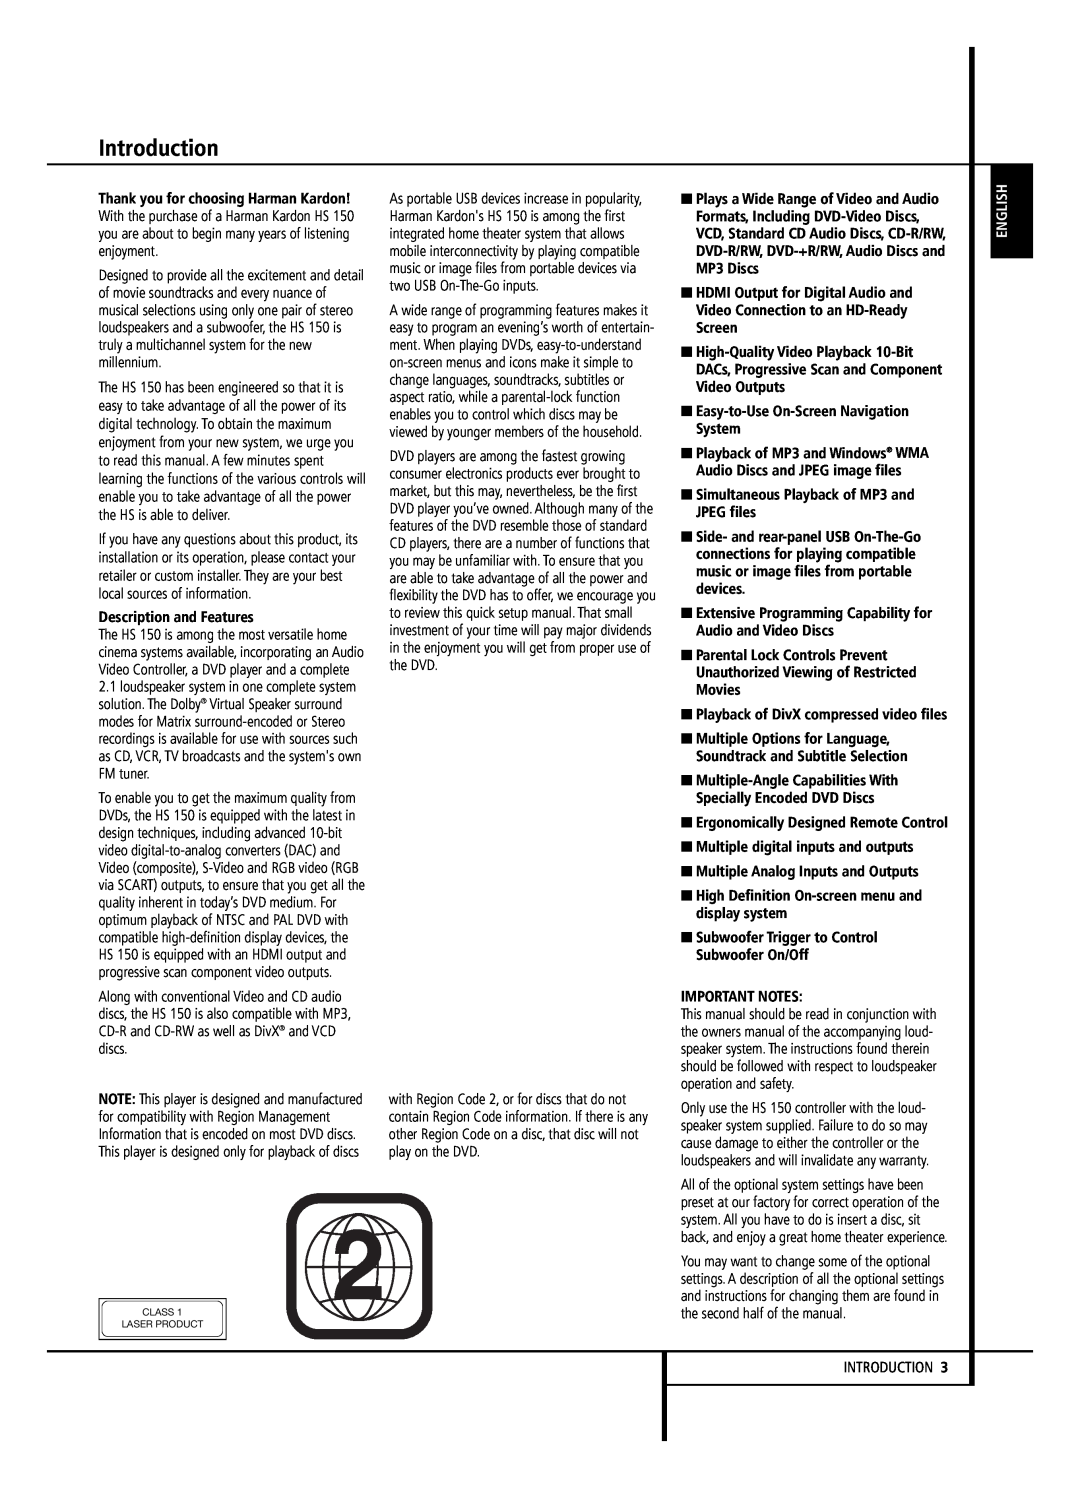 Harman-Kardon HS 150 owner manual Introduction, English 